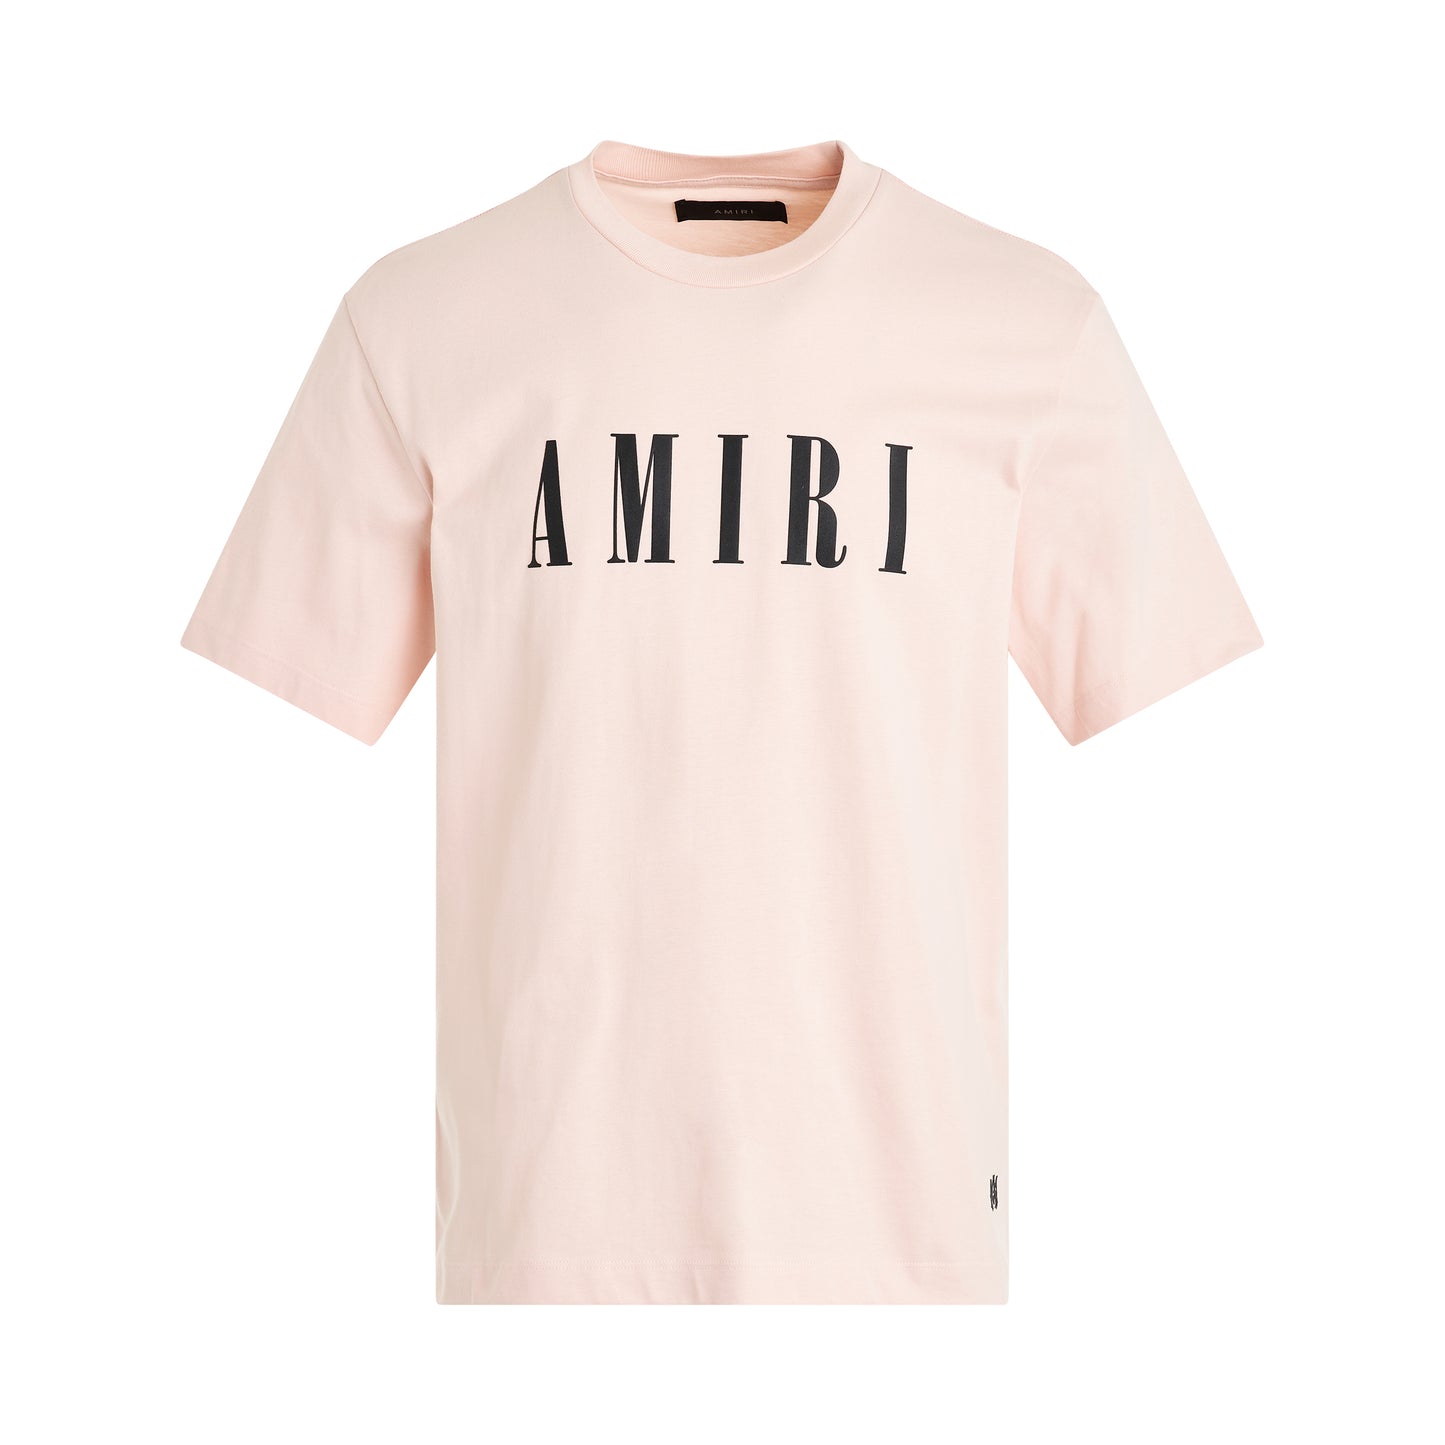 Amiri Core Logo T-Shirt in Cream Tan